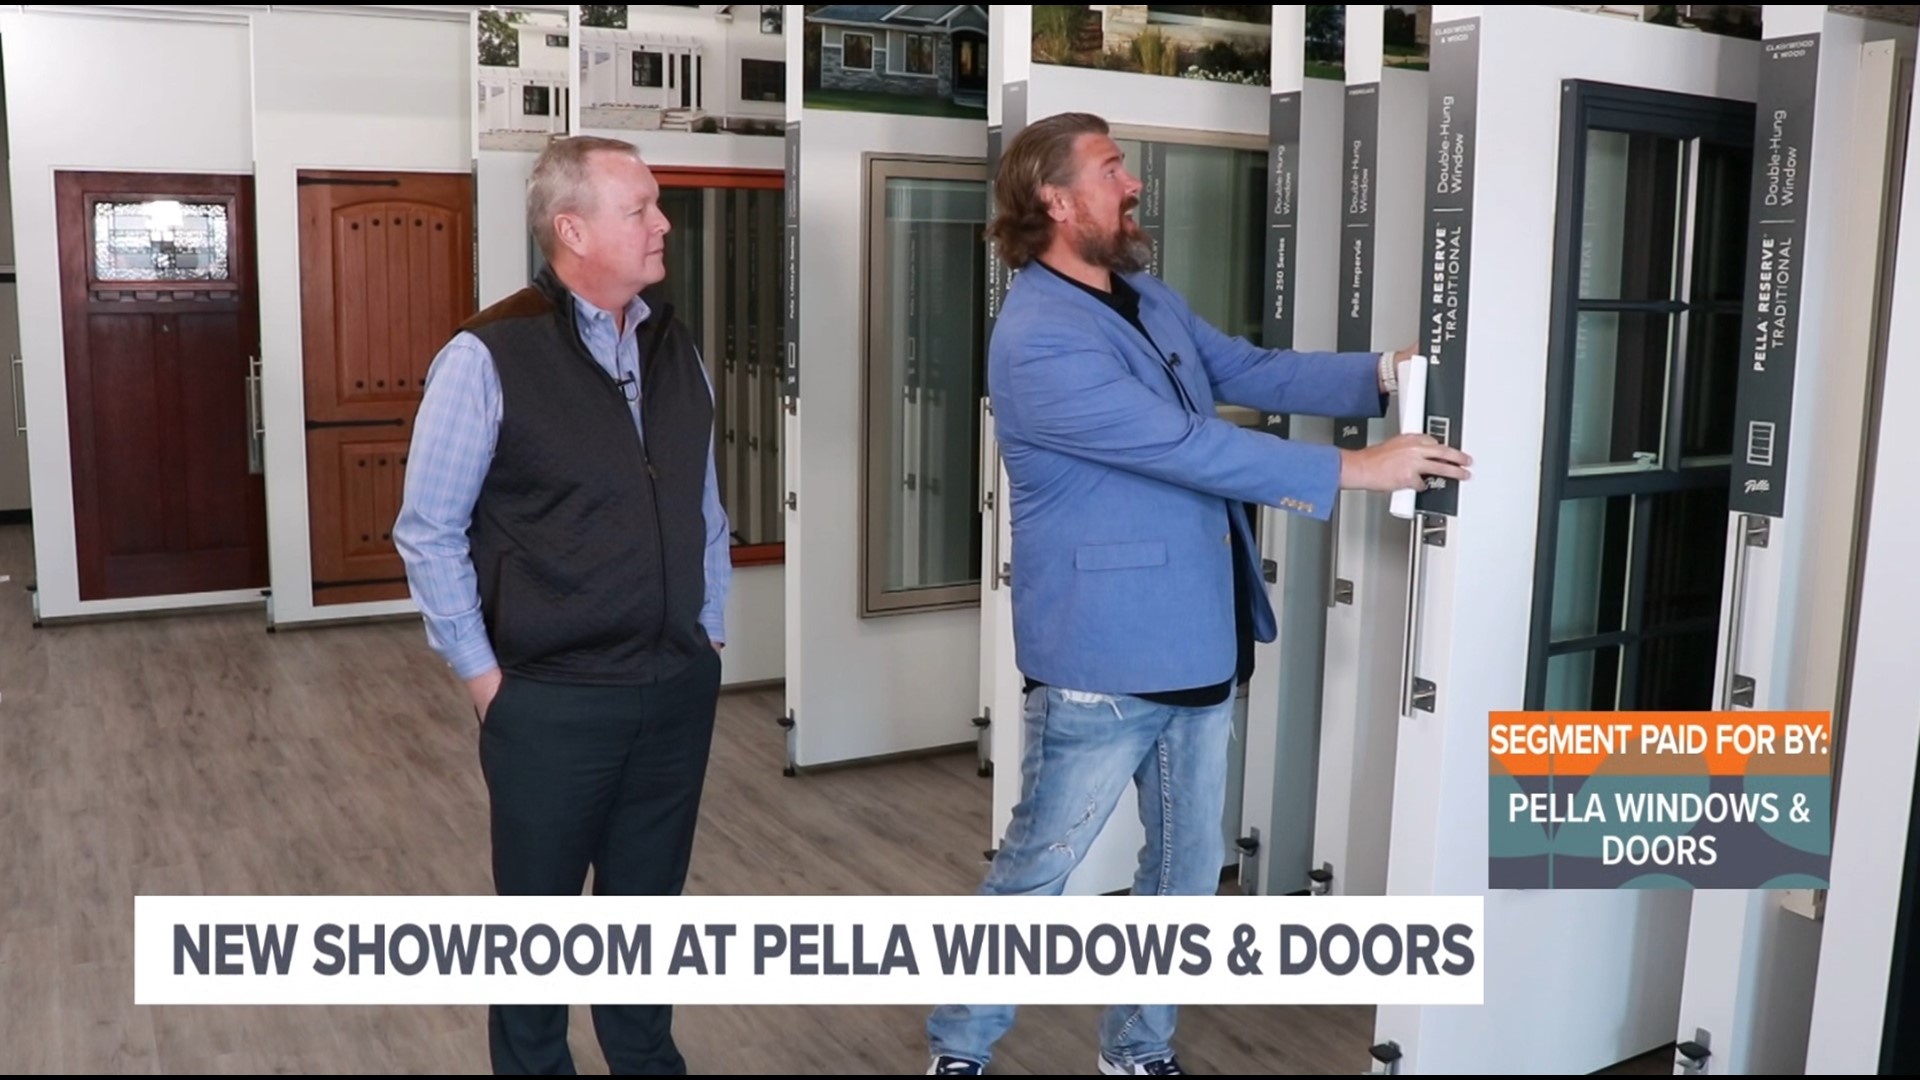 We get an inside look at the new Pella Windows & Doors showroom in North Little Rock.